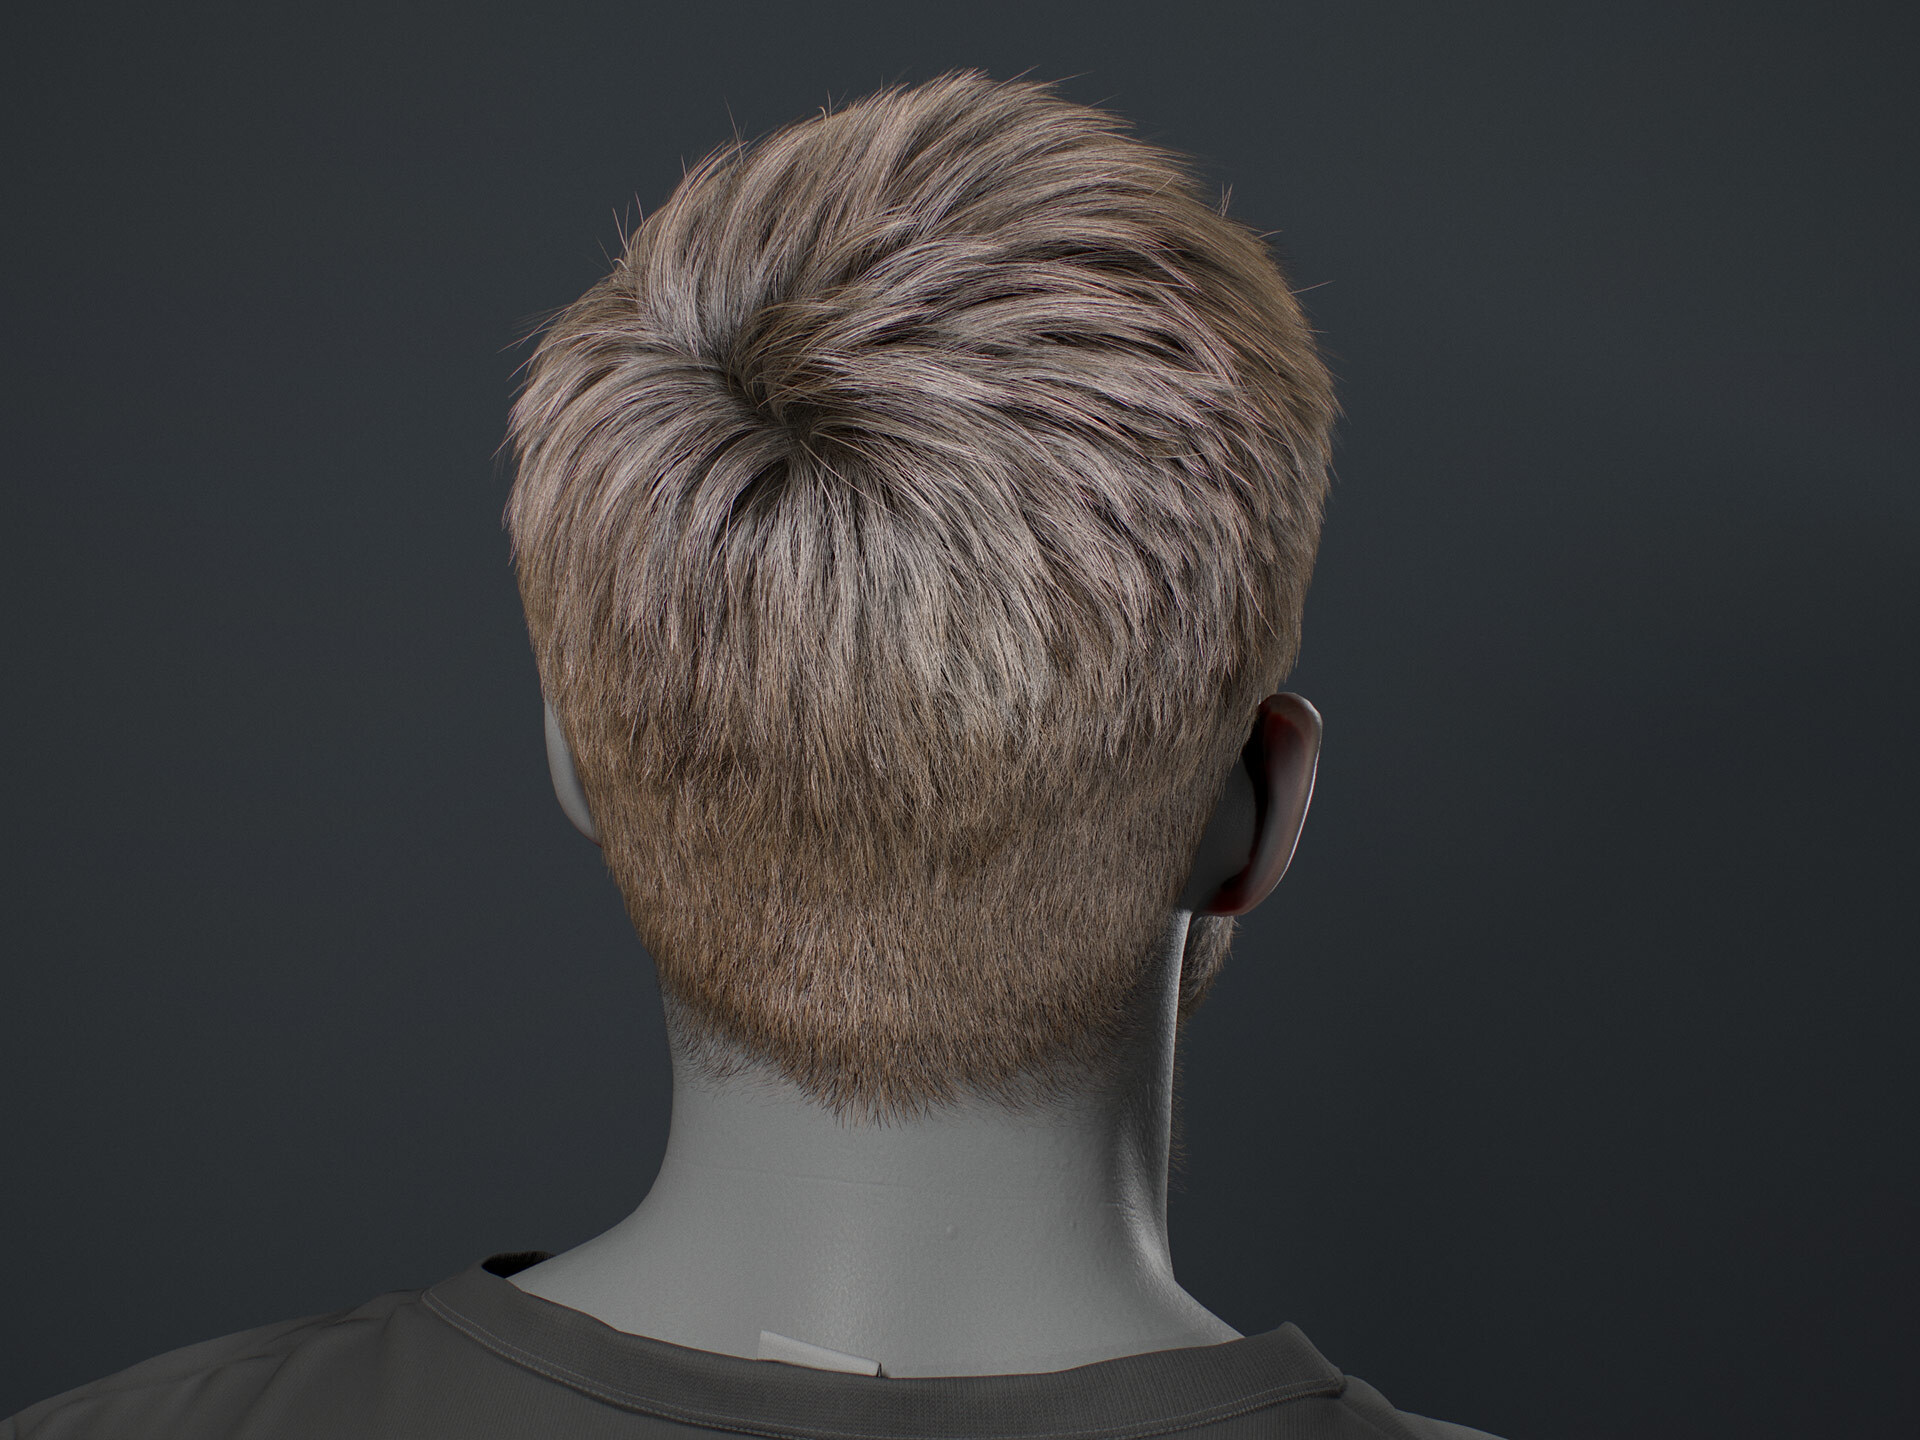 ArtStation - Male short hairstyles 01